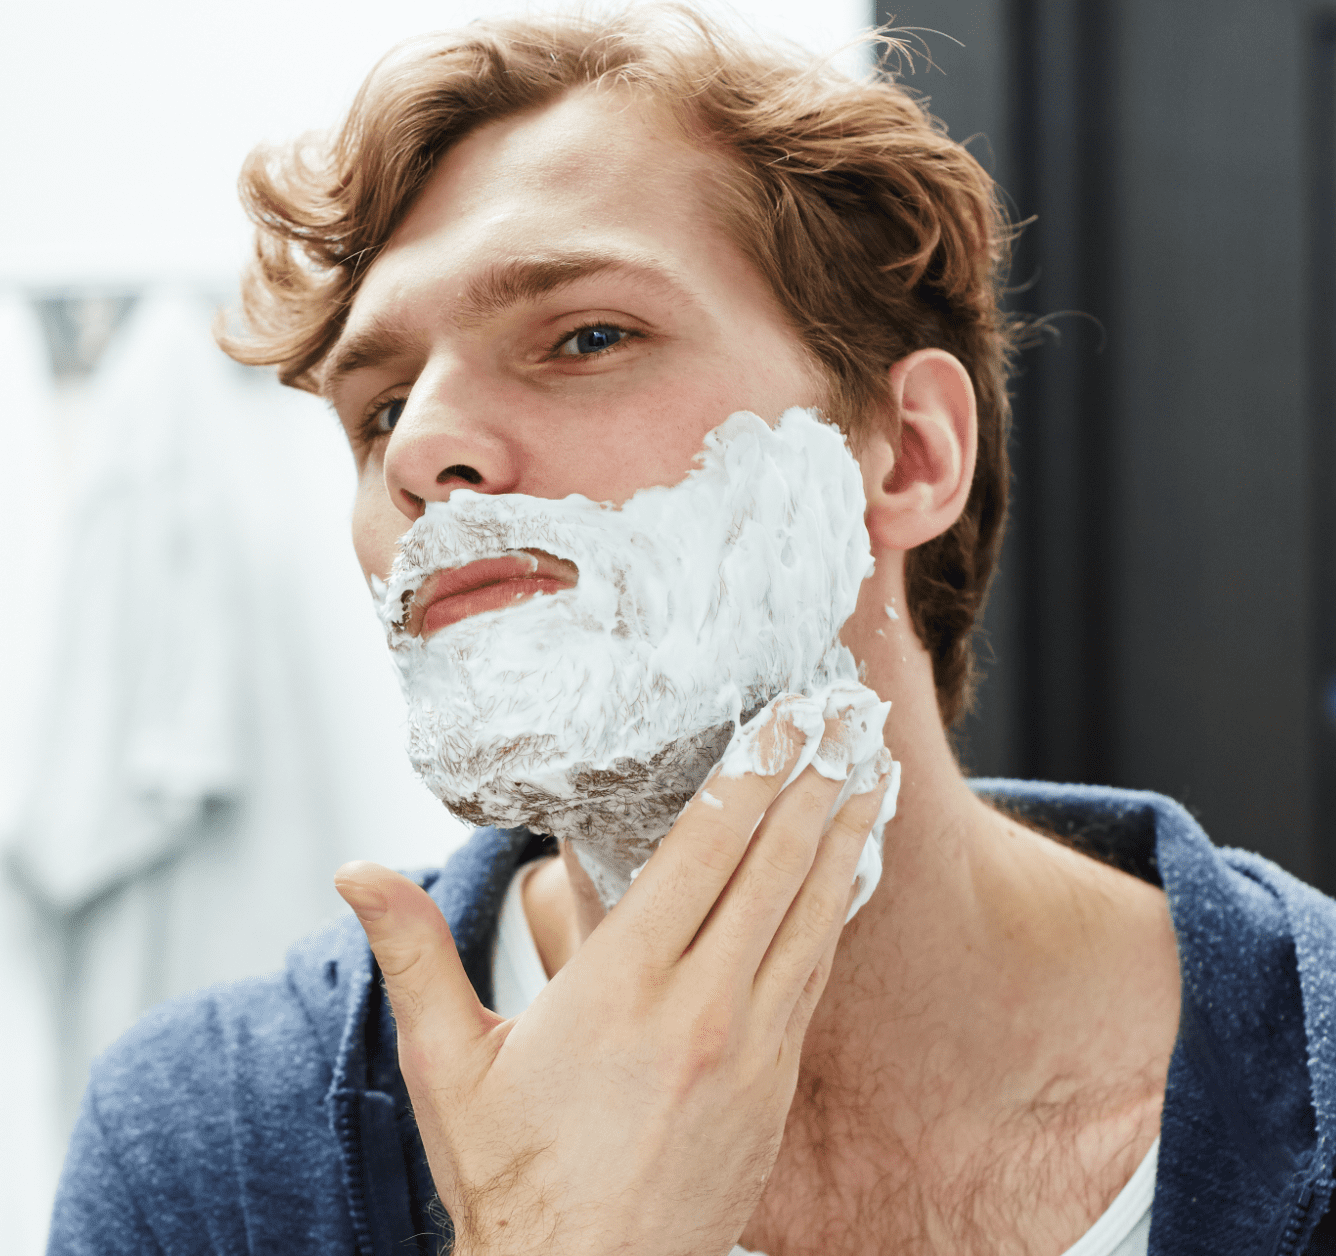 Gillette Foamy Shaving Cream, Sensitive Skin - 11 oz can